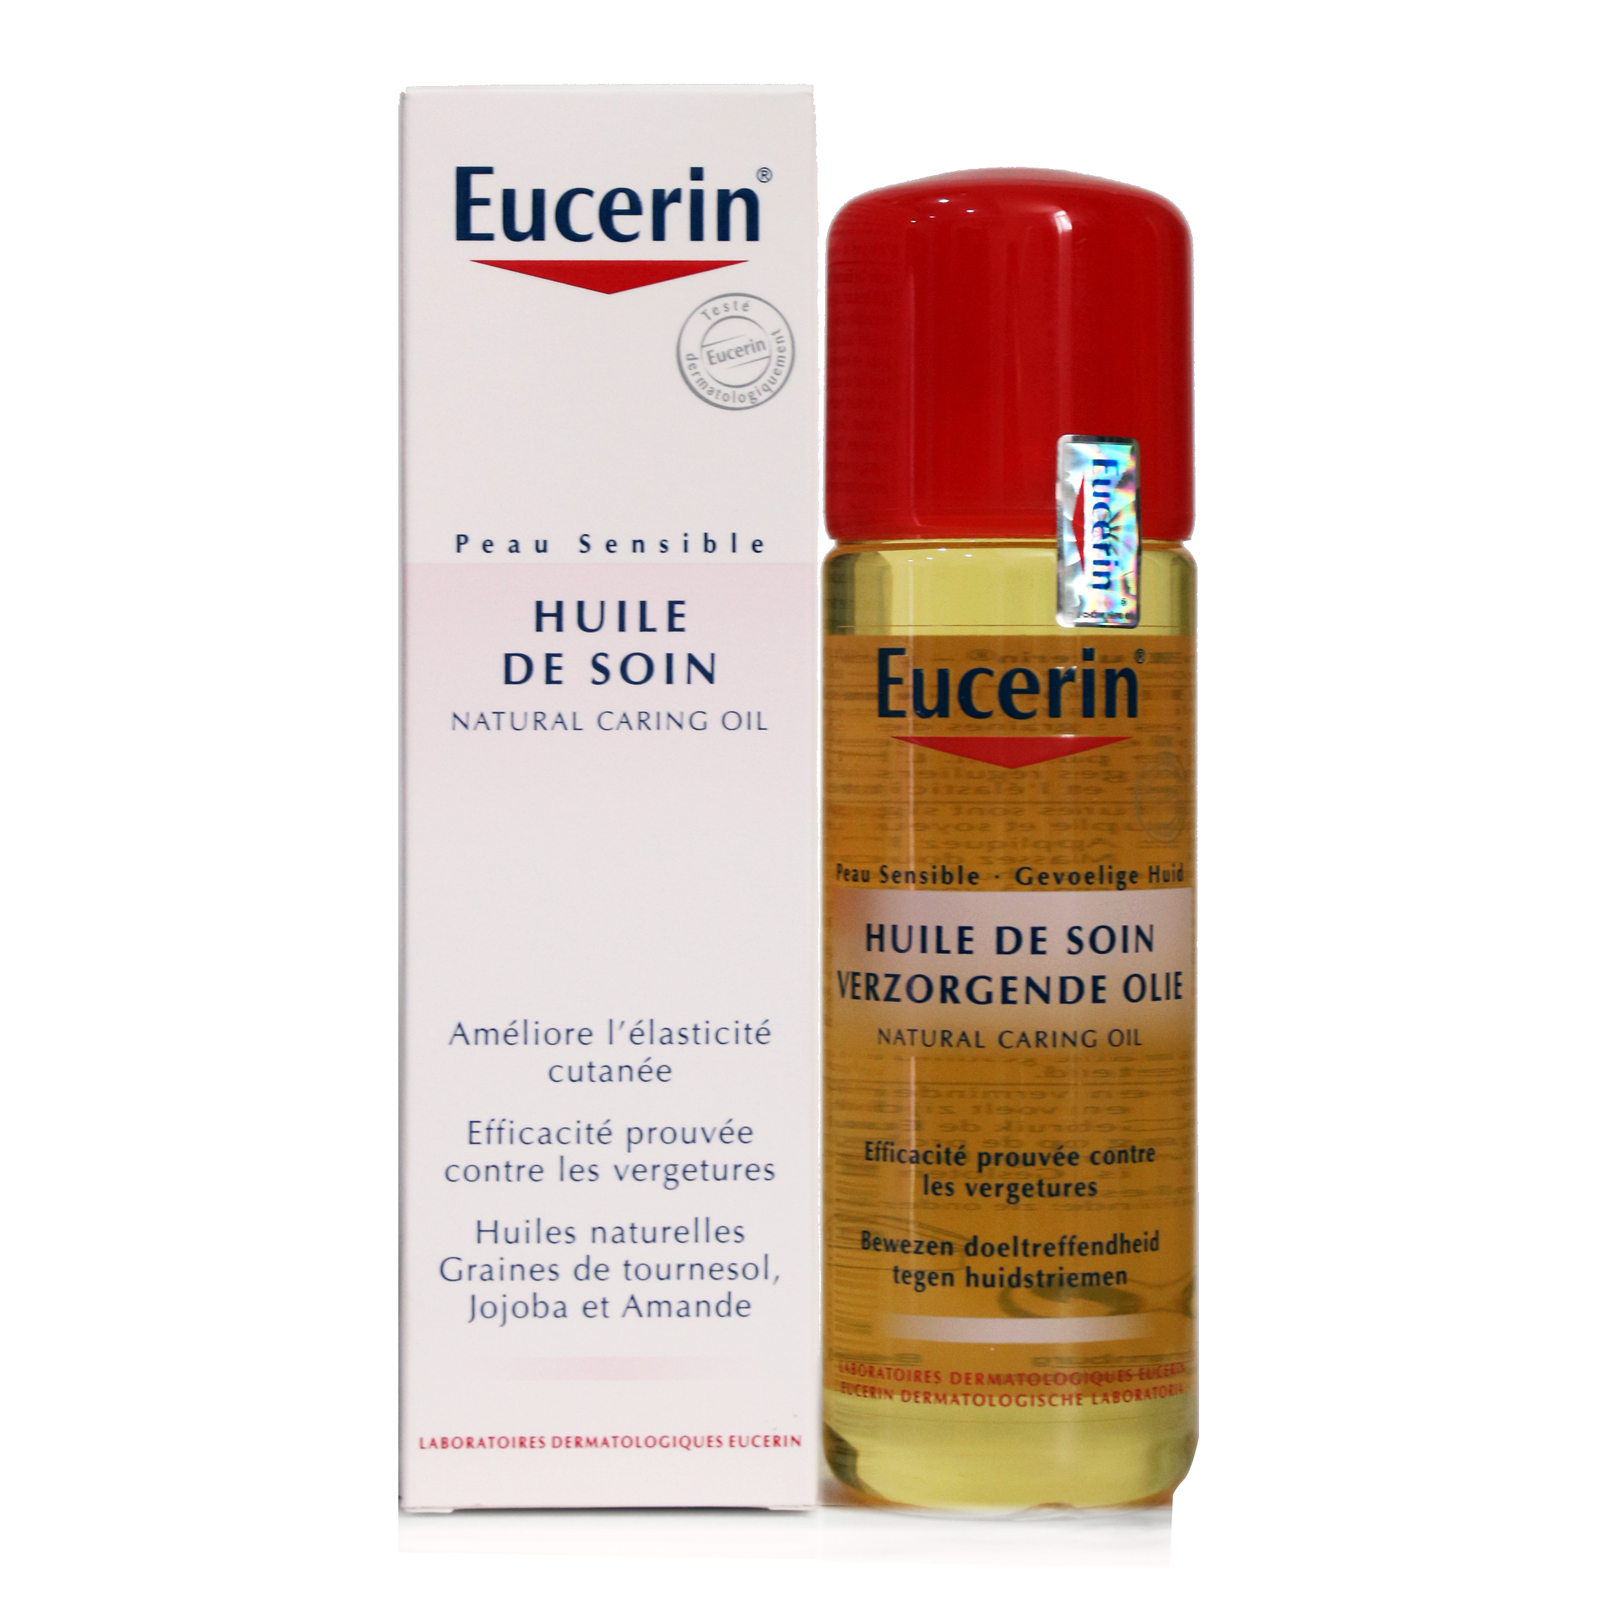 eucerin natural caring oil